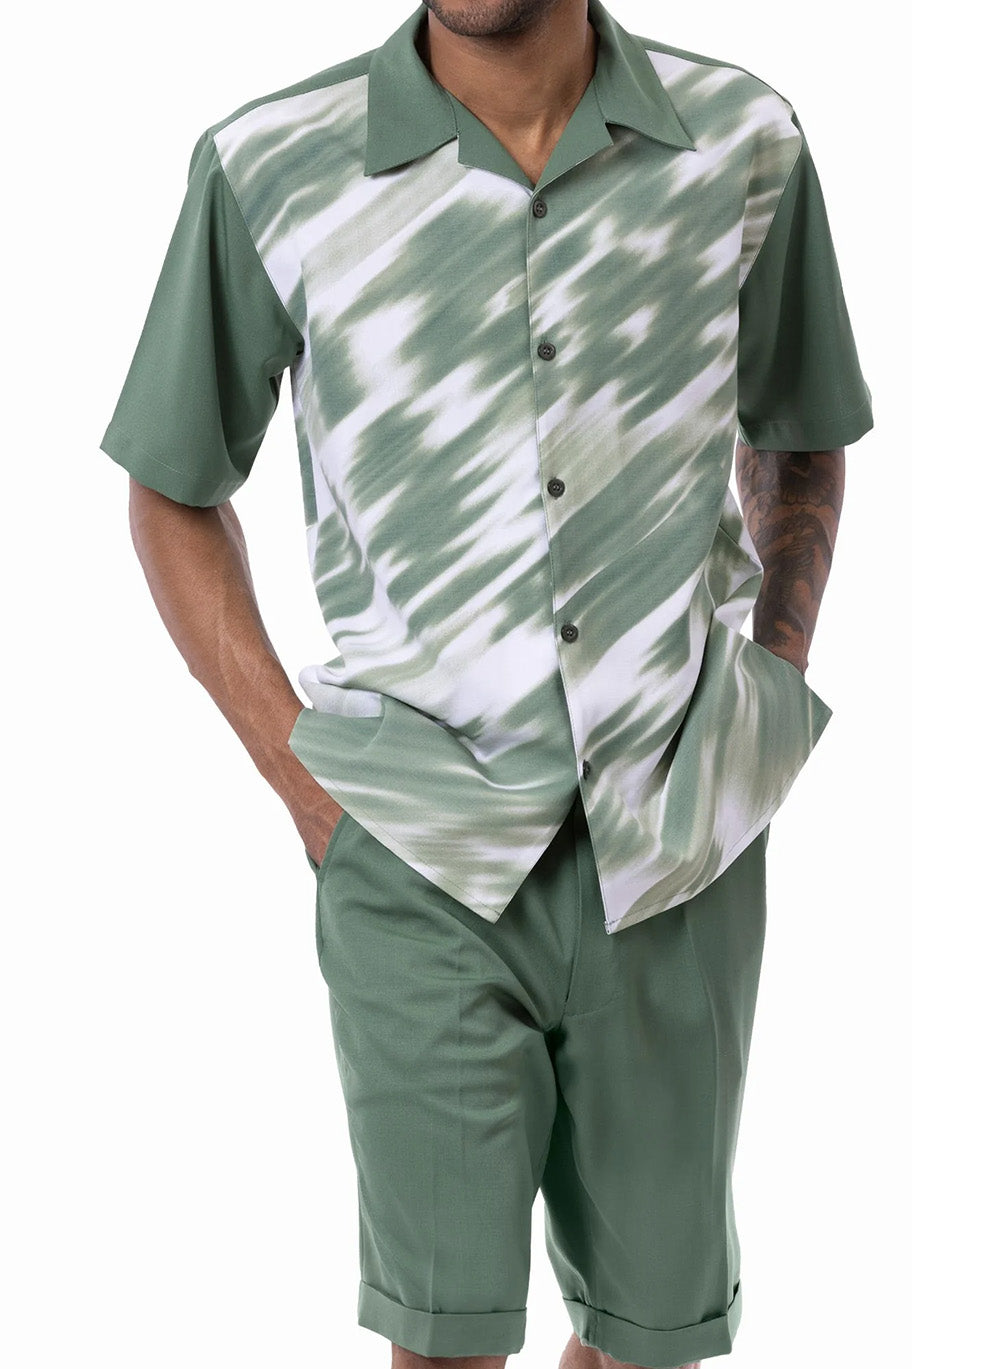 Emerald Print Design Walking Suit 2 Piece Set Short Sleeve Shirt with Shorts